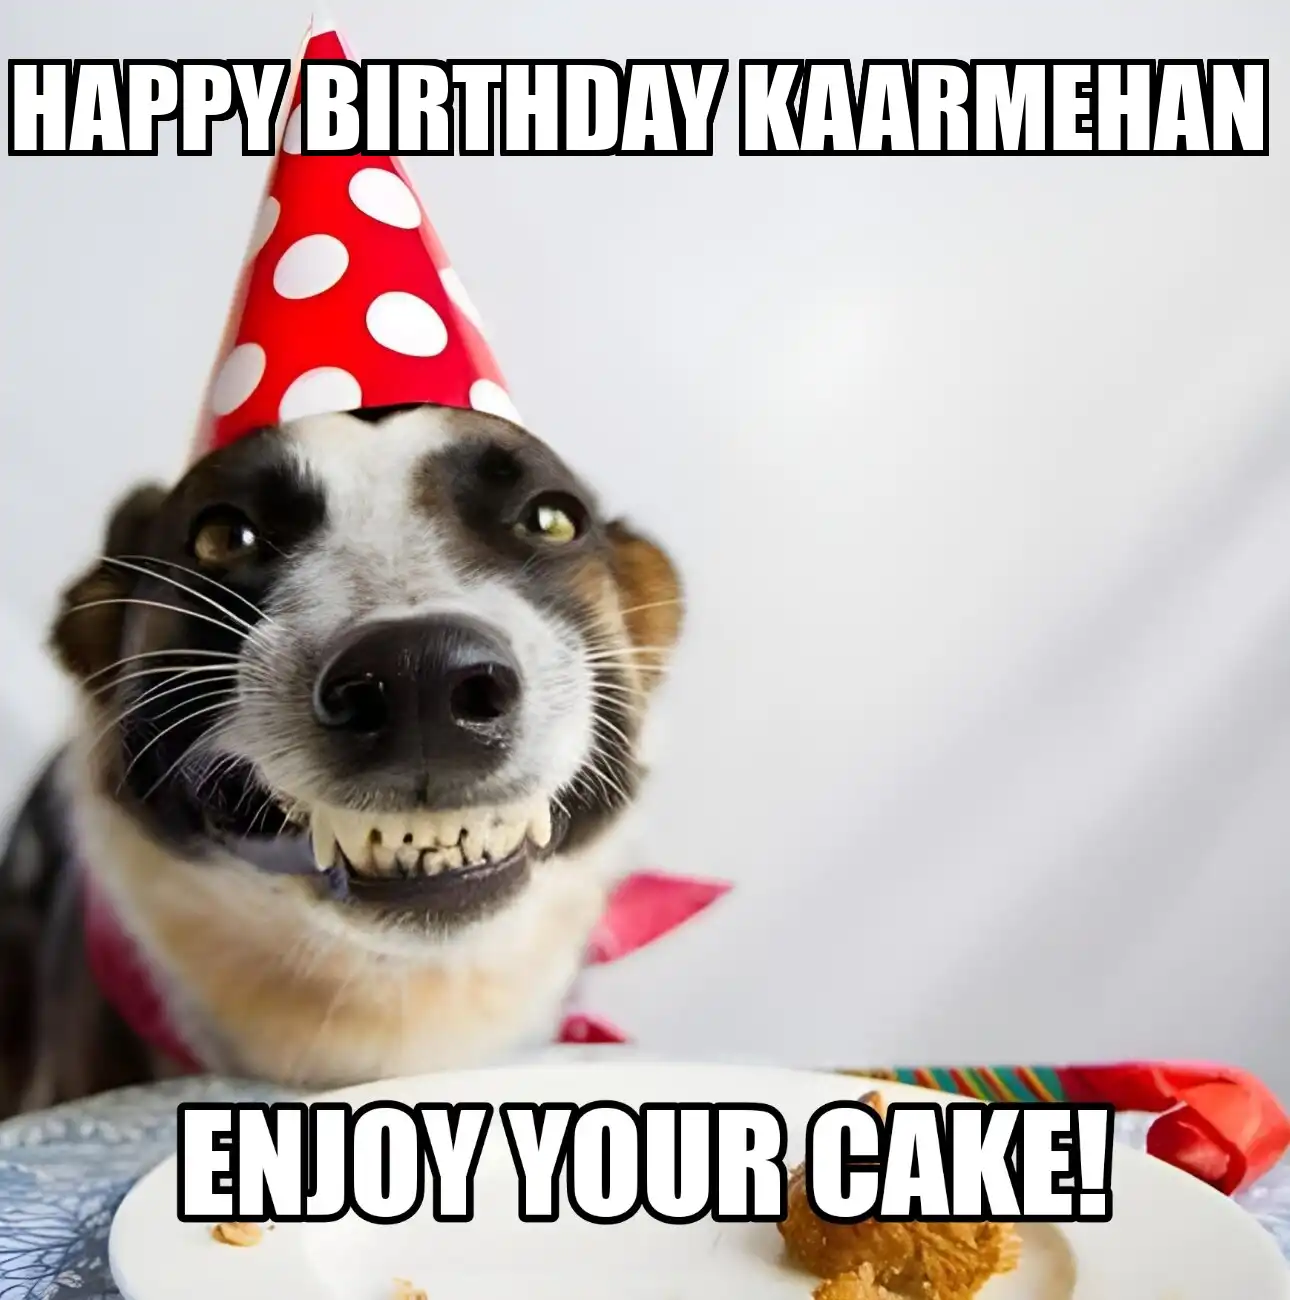 Happy Birthday Kaarmehan Enjoy Your Cake Dog Meme